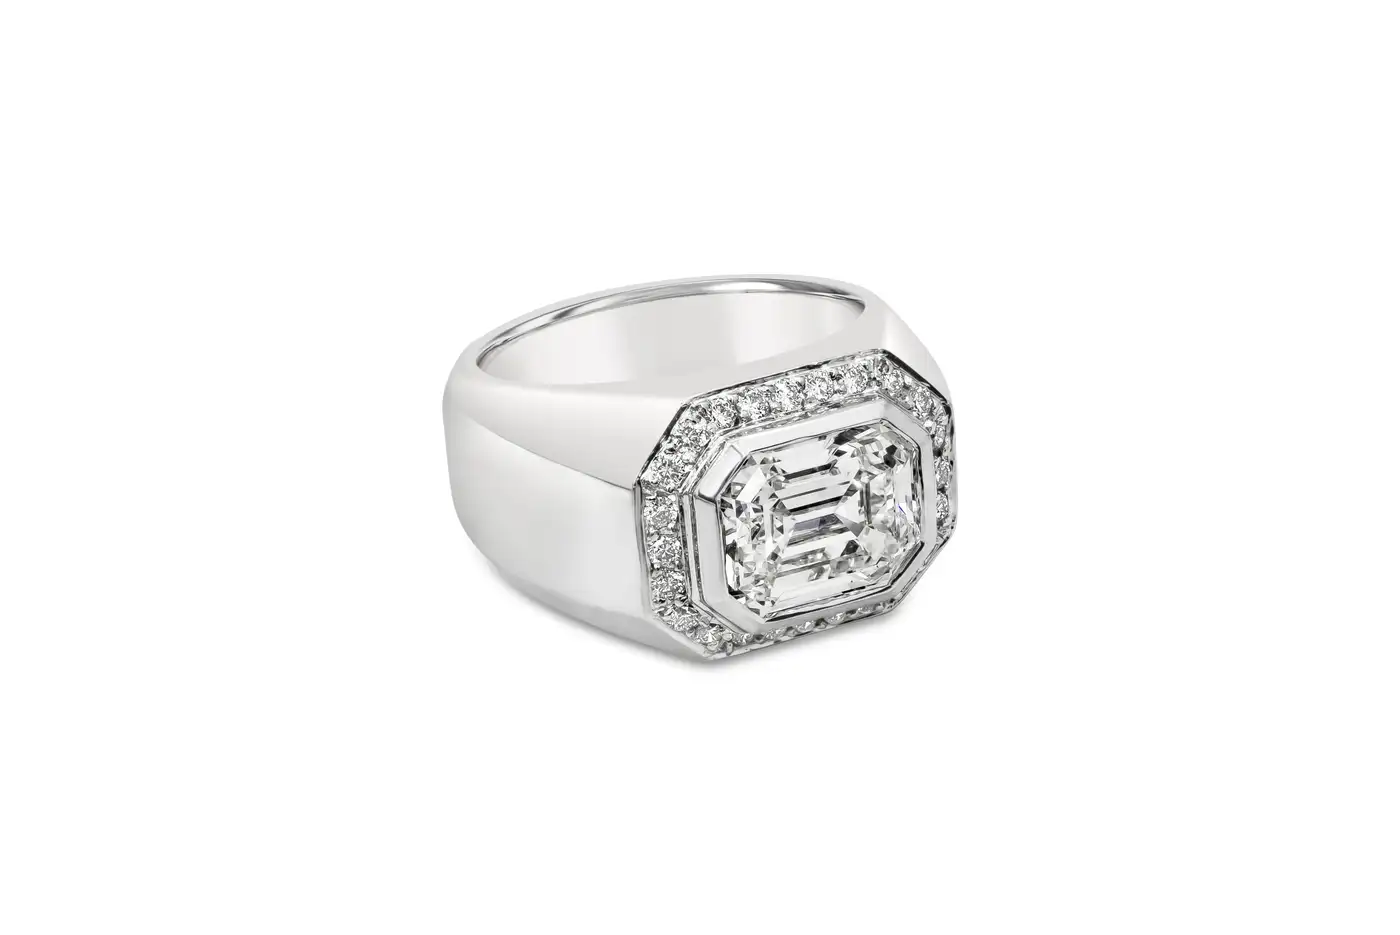 Roman-Malakov-GIA-Certified-3.14-Carats-Total-Emerald-Cut-Diamond-Mens-Ring-5.webp